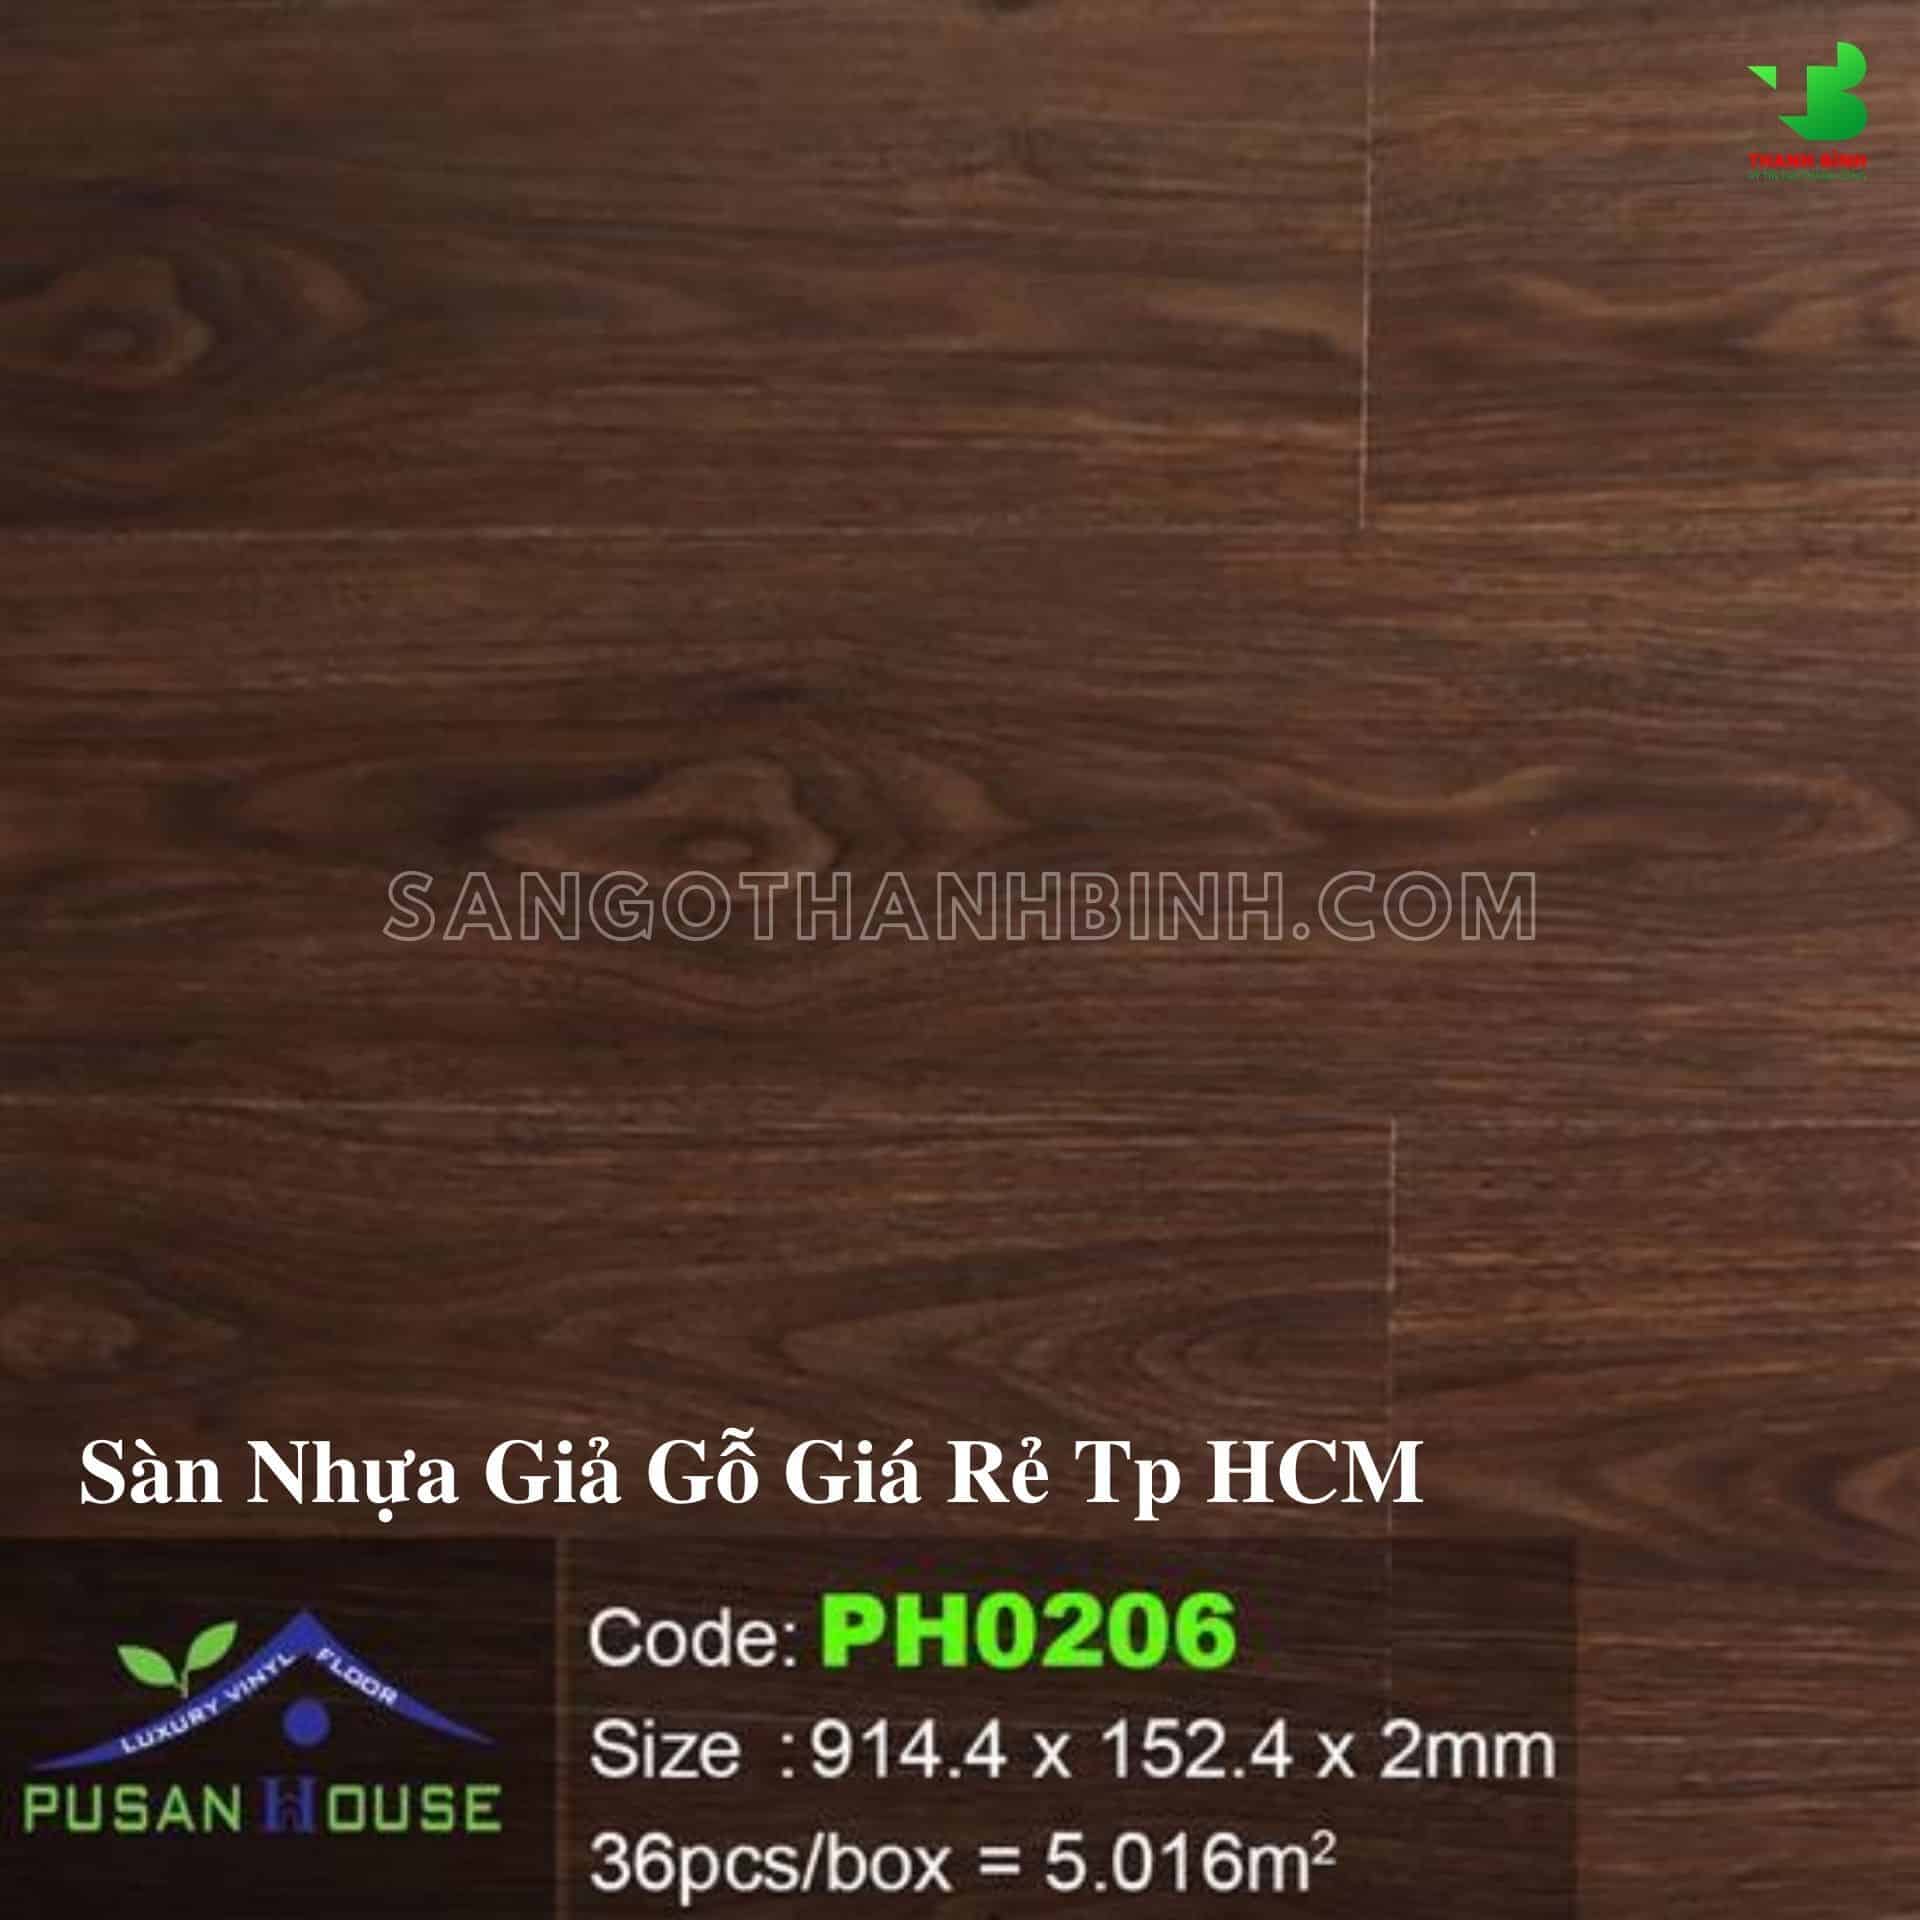 San Nhua Gia Go Pusan 2mm Ma PH0206